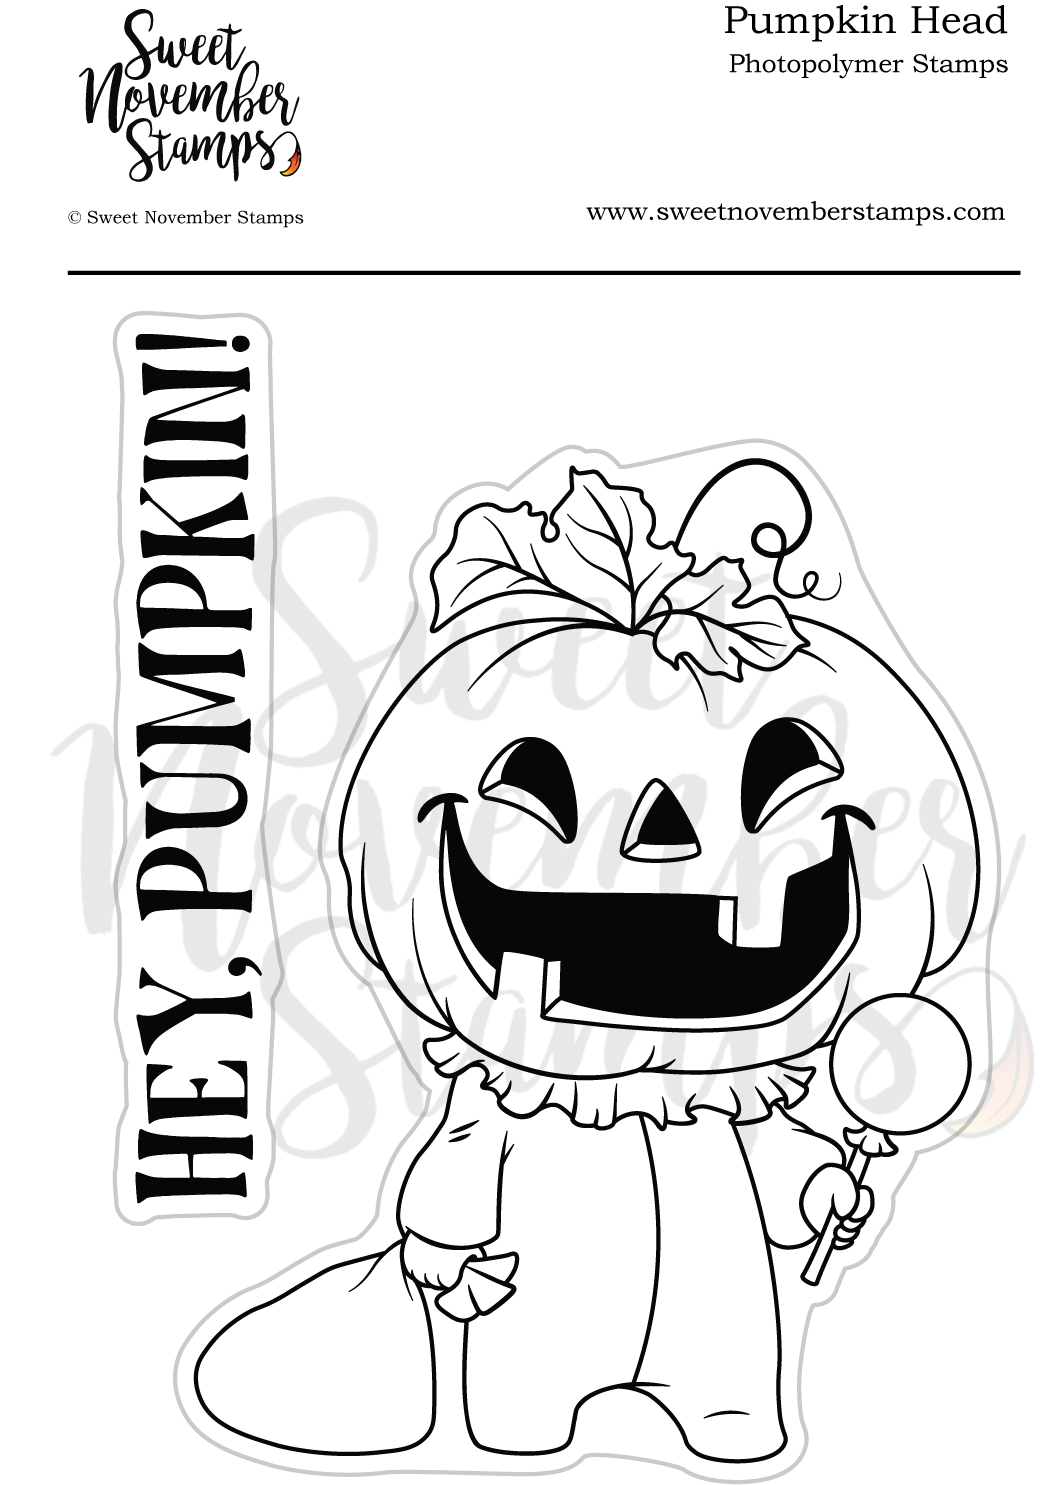 ****NEW**** Sweet November - Pumpkin Head stamp set